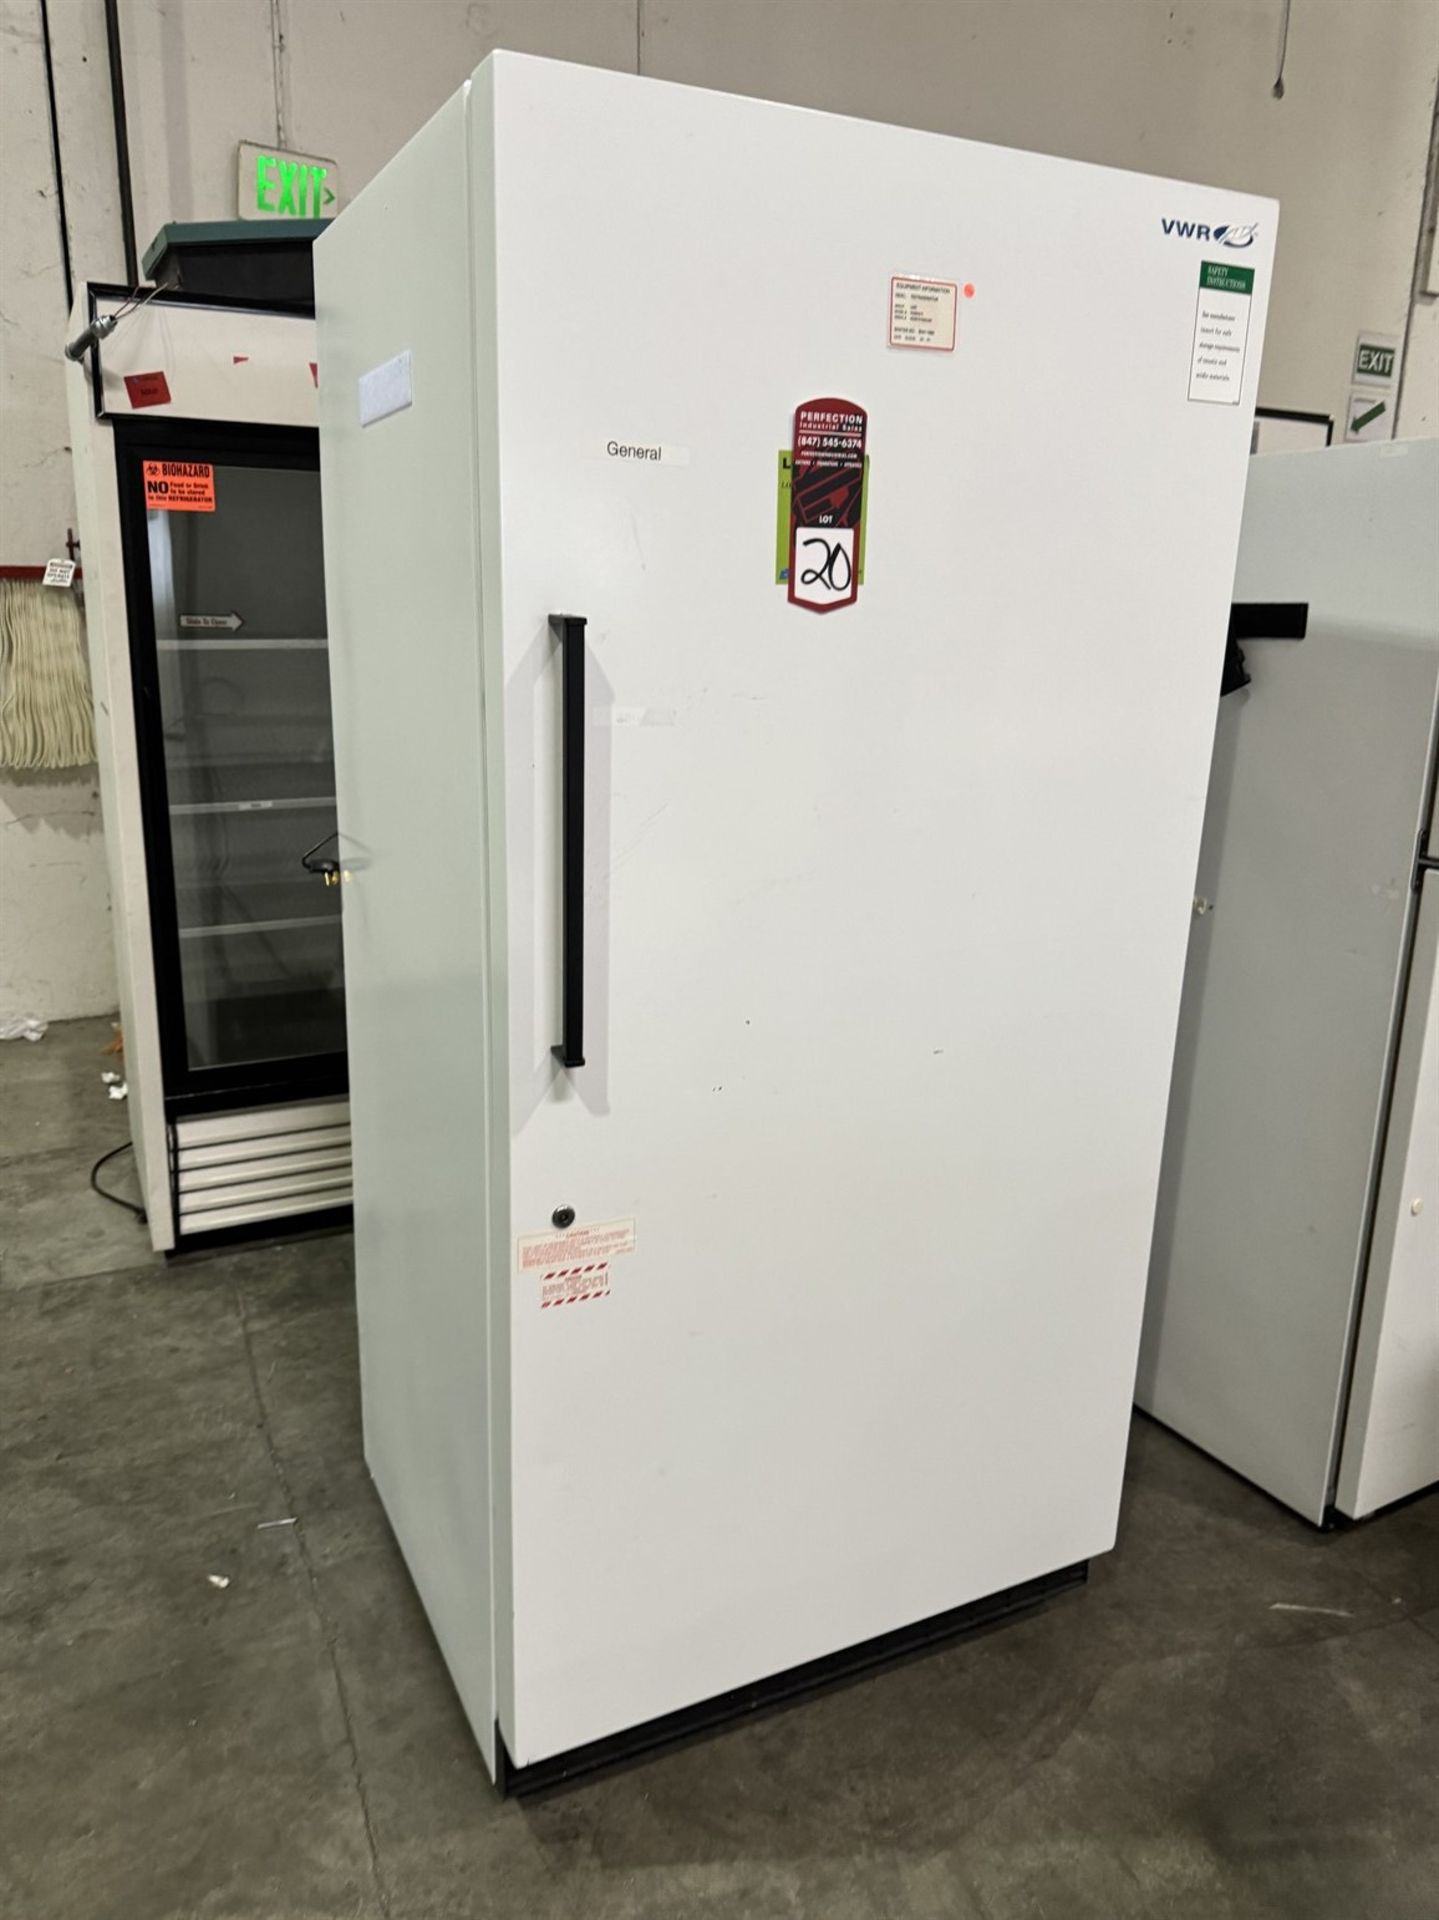 THERMO ELECTRON R429GA14 General Purpose Refrigerator, s/n W20R-615259-WR